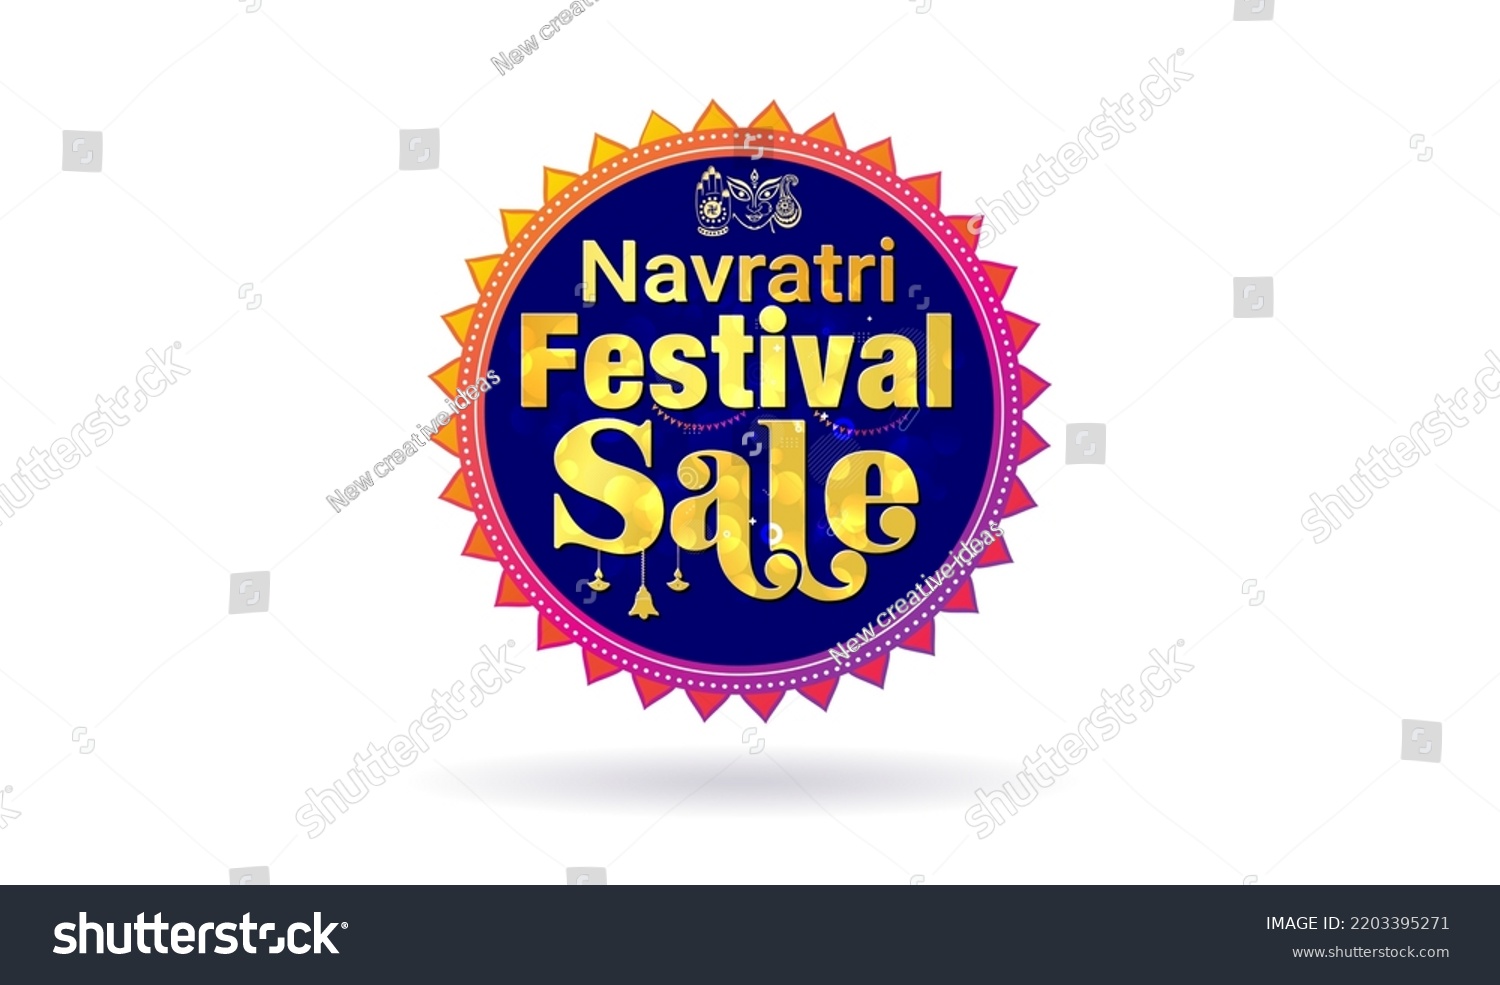 SVG of Navratri festive sale logo design. Indian hindu festival of Durga Puja or dandiya. svg